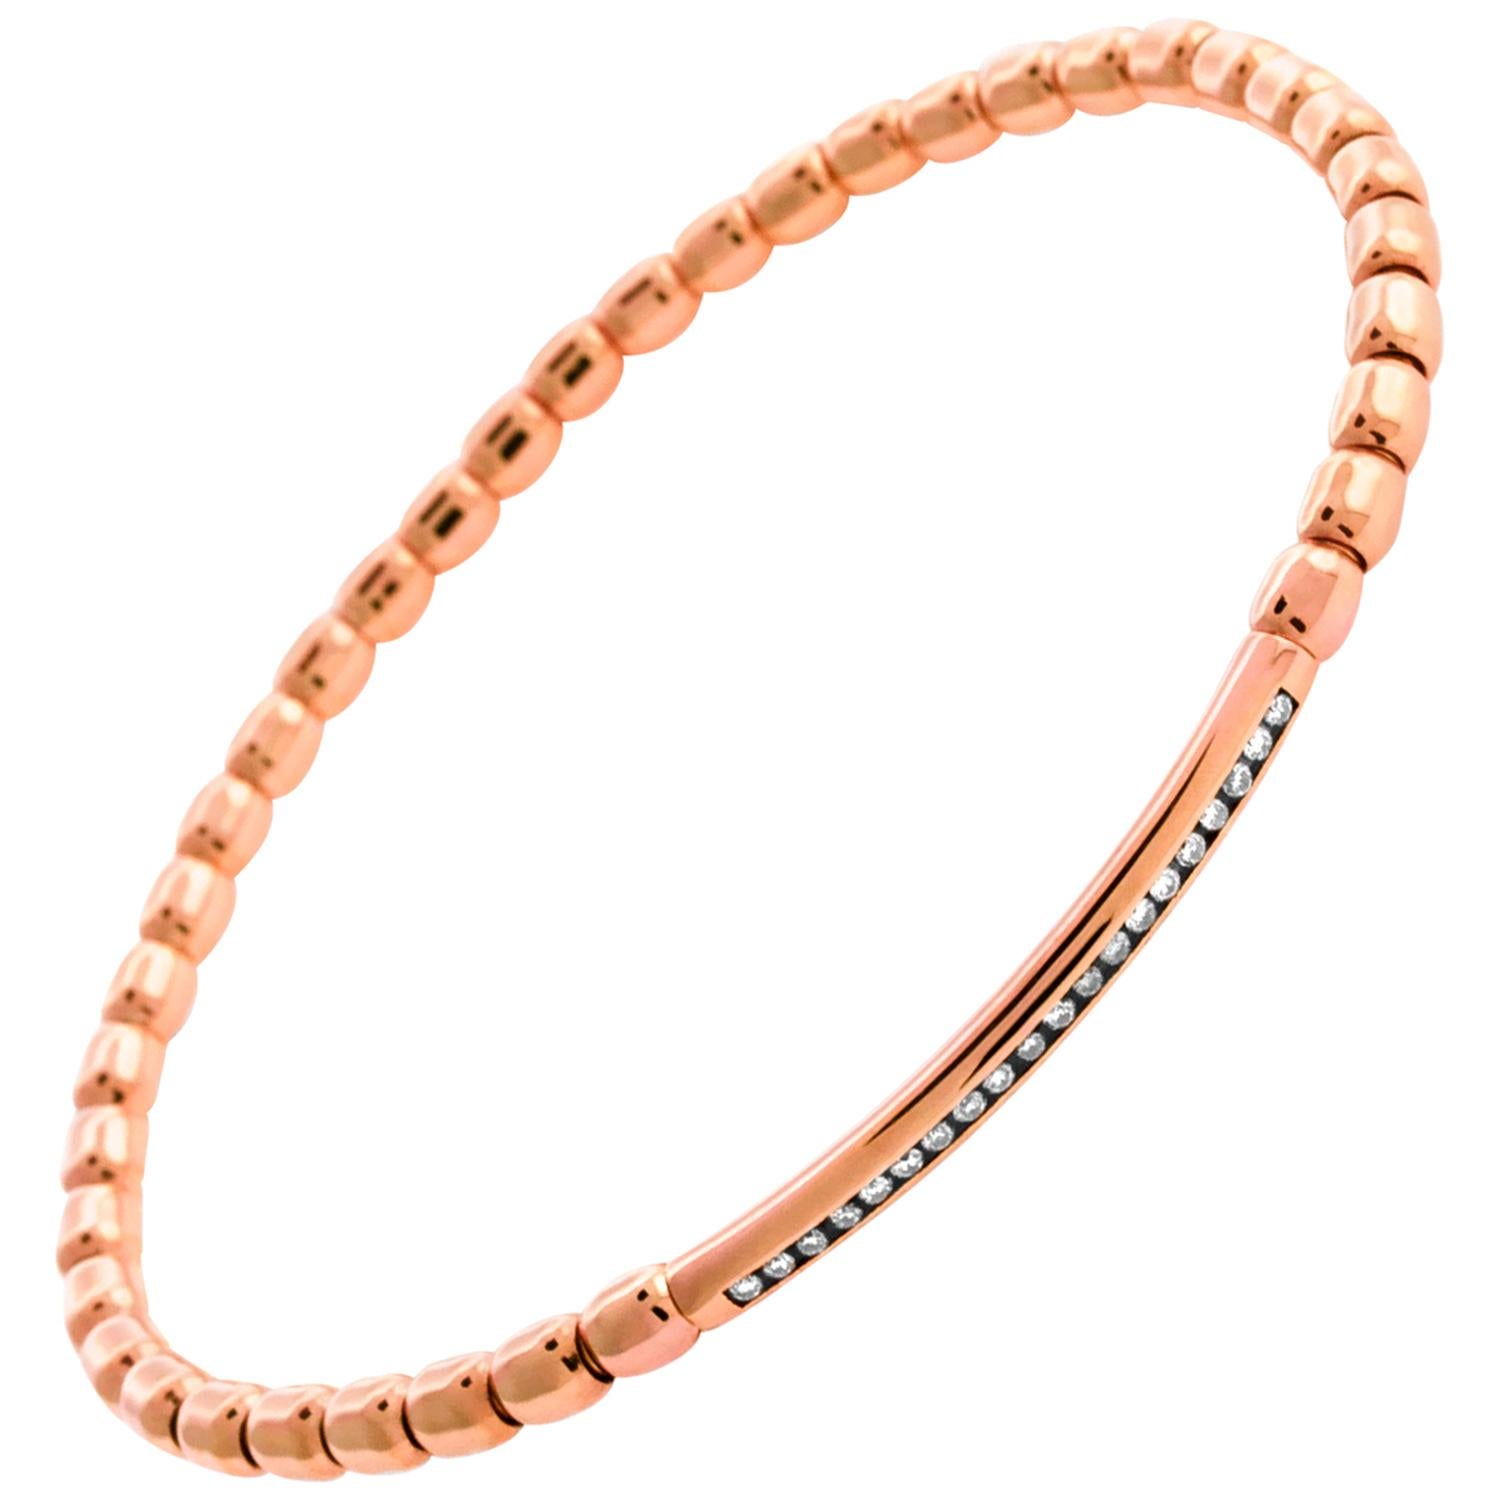 Gold Luxe Bracelet in 18 Karat Rose Gold with White Diamonds - Medium